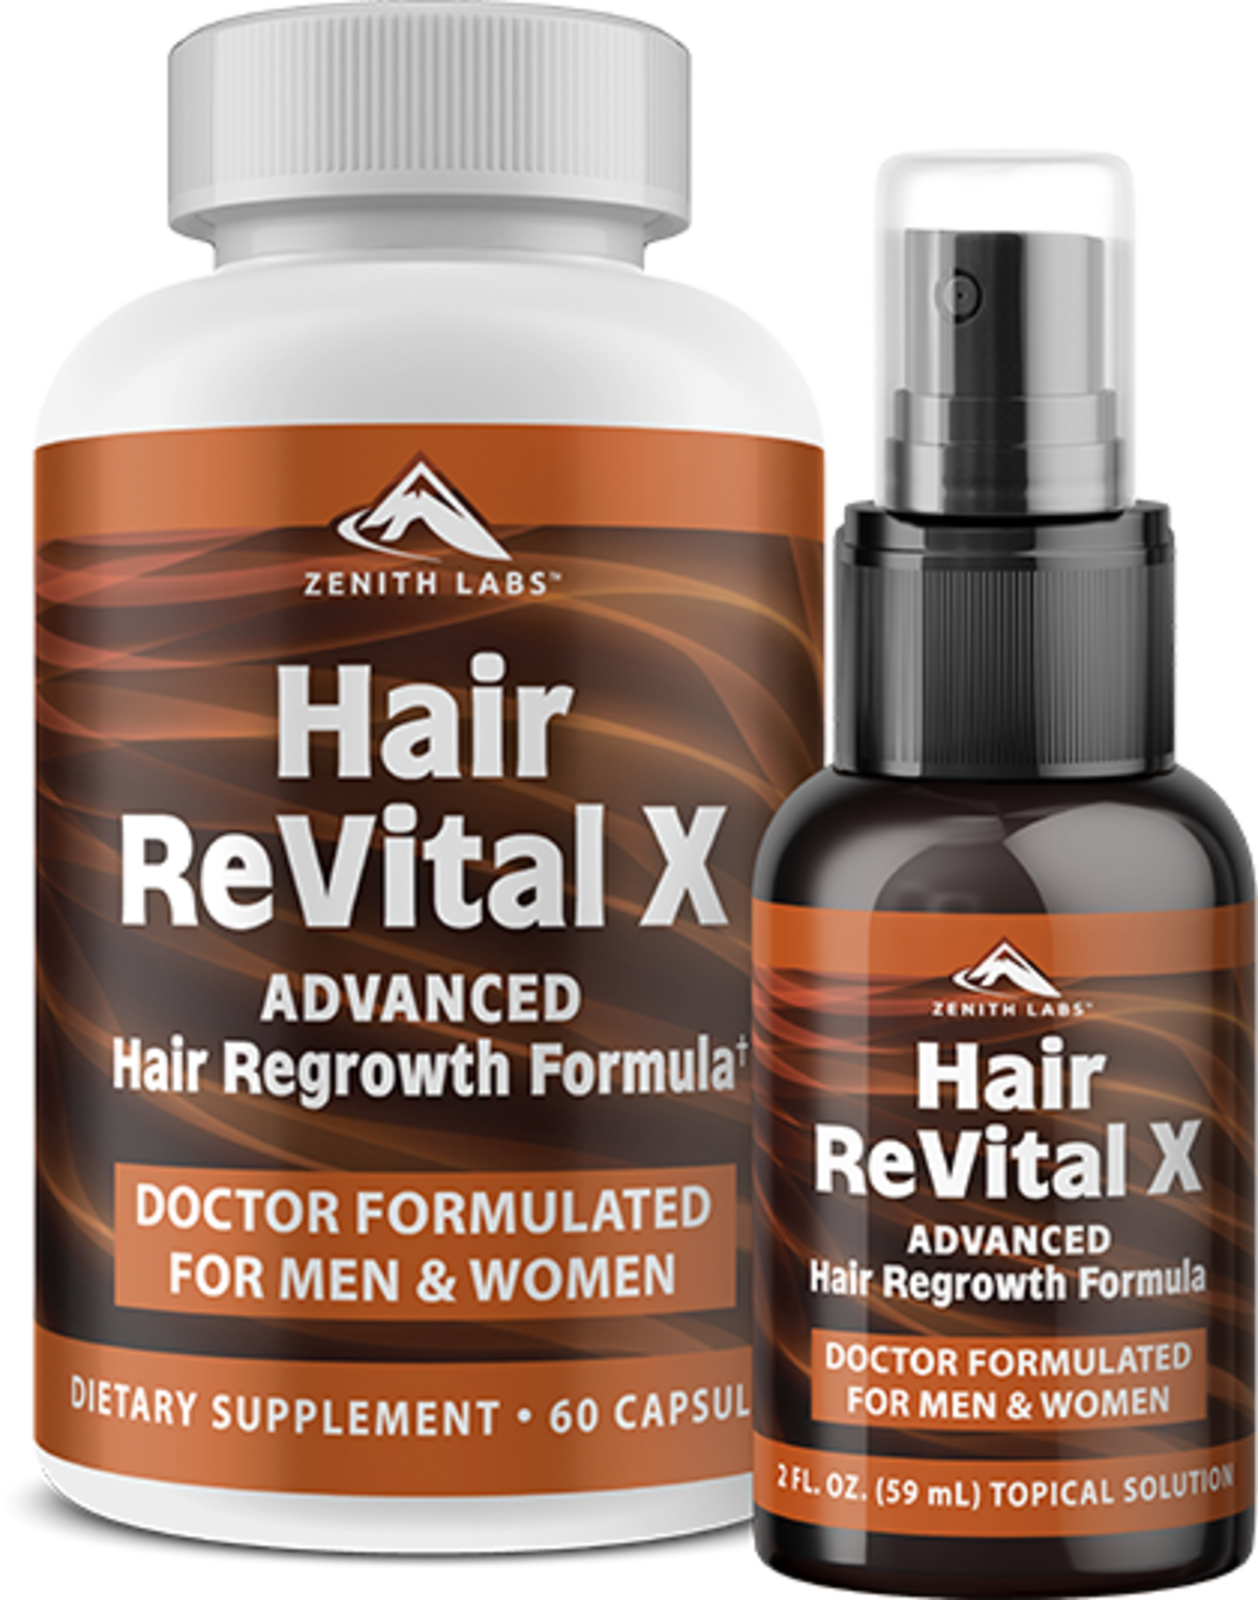 Hair Revital X Reviews